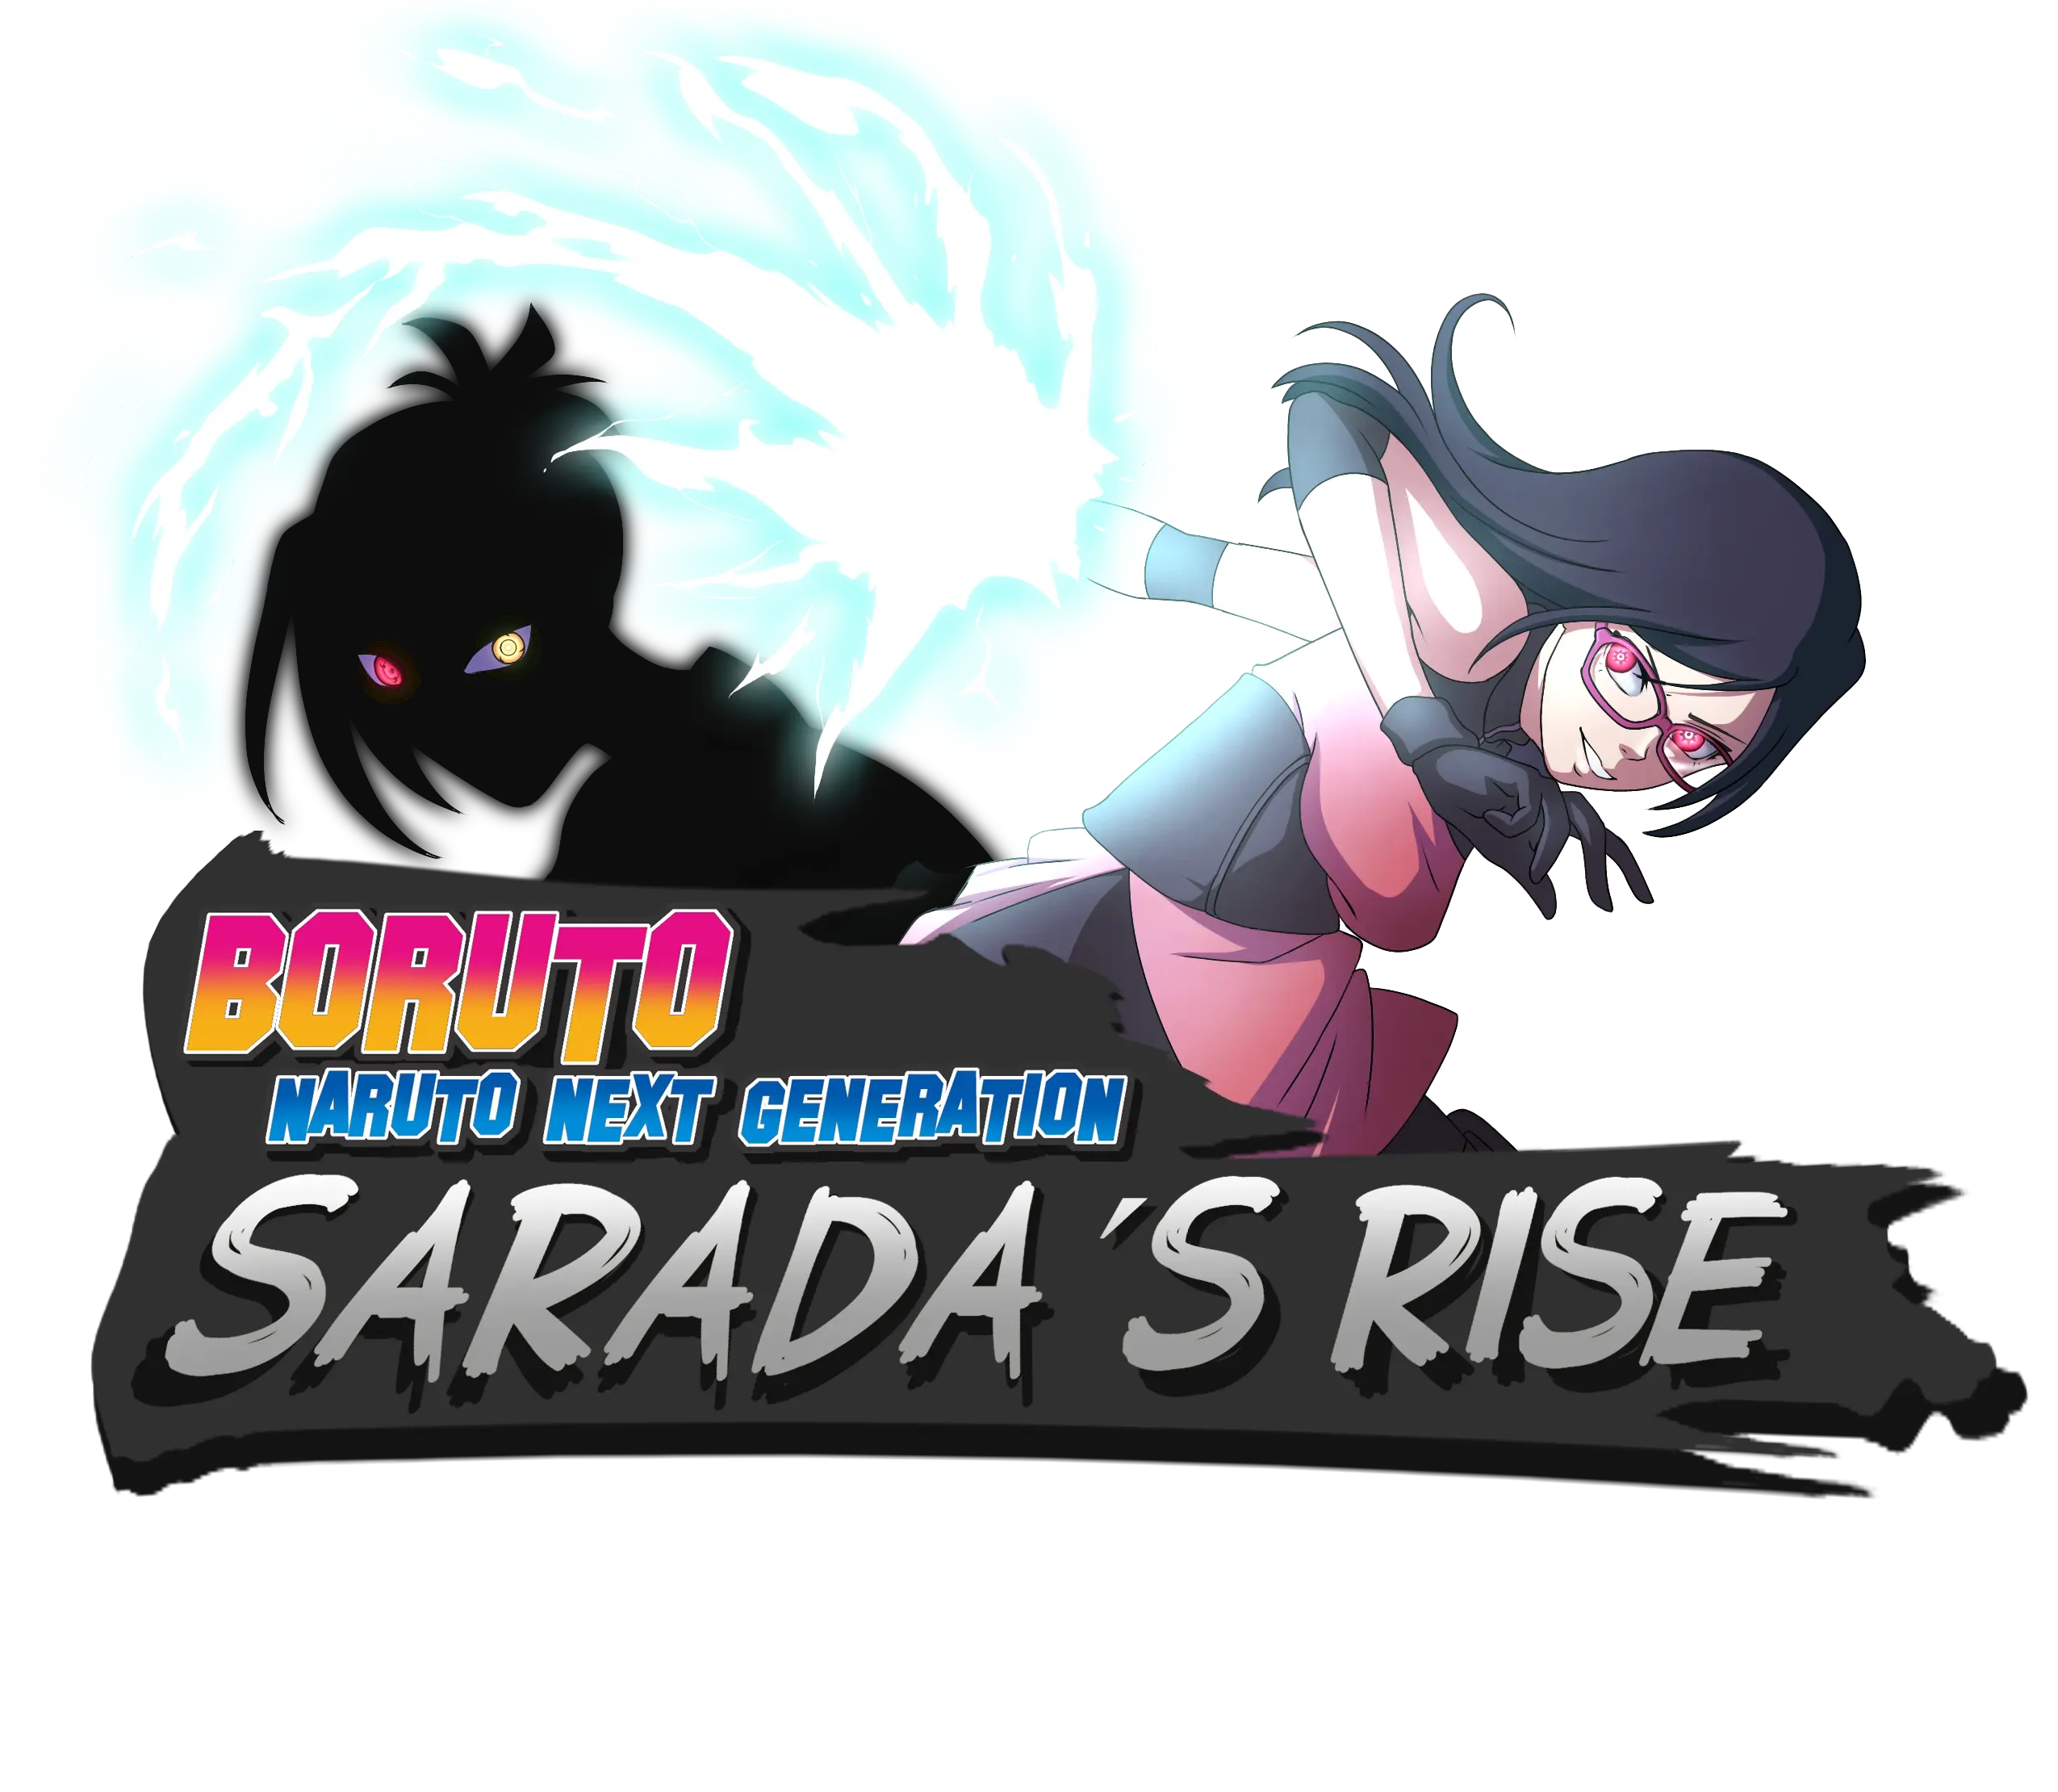 Sarada Rising + Boruto Naruto Next Generation main image